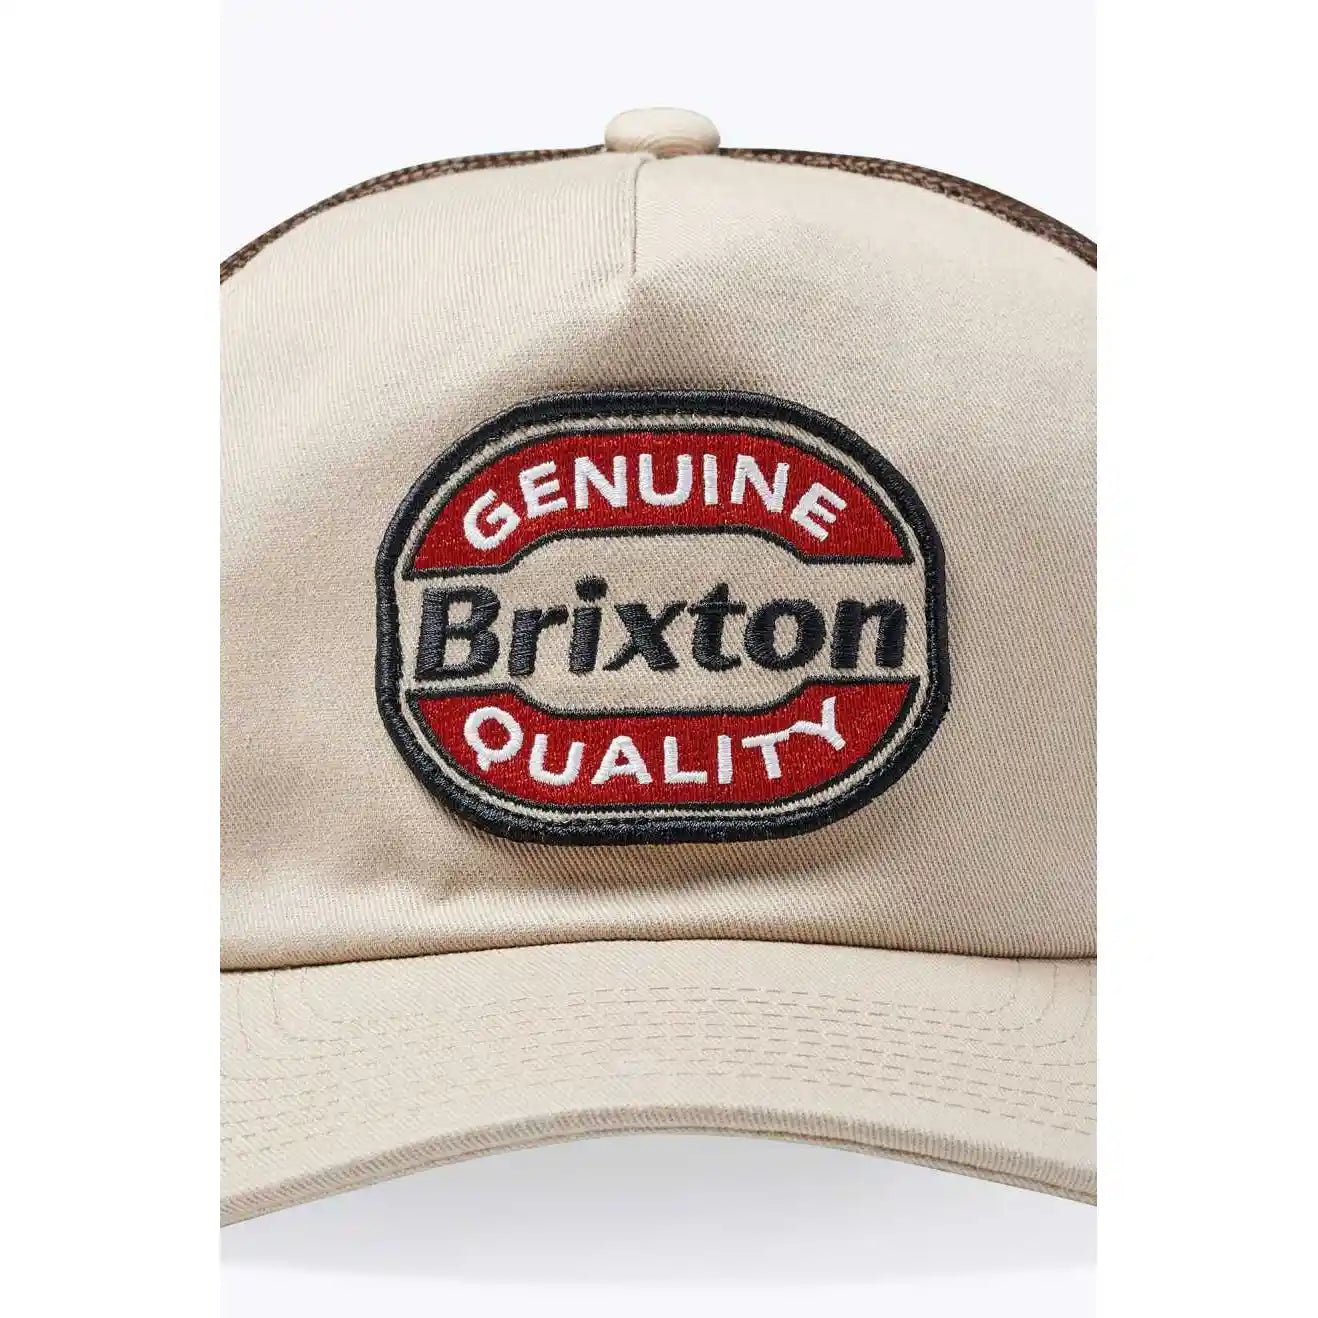 Brixton Keaton Trucker Hat, sand/sepia - Tiki Room Skateboards - 2